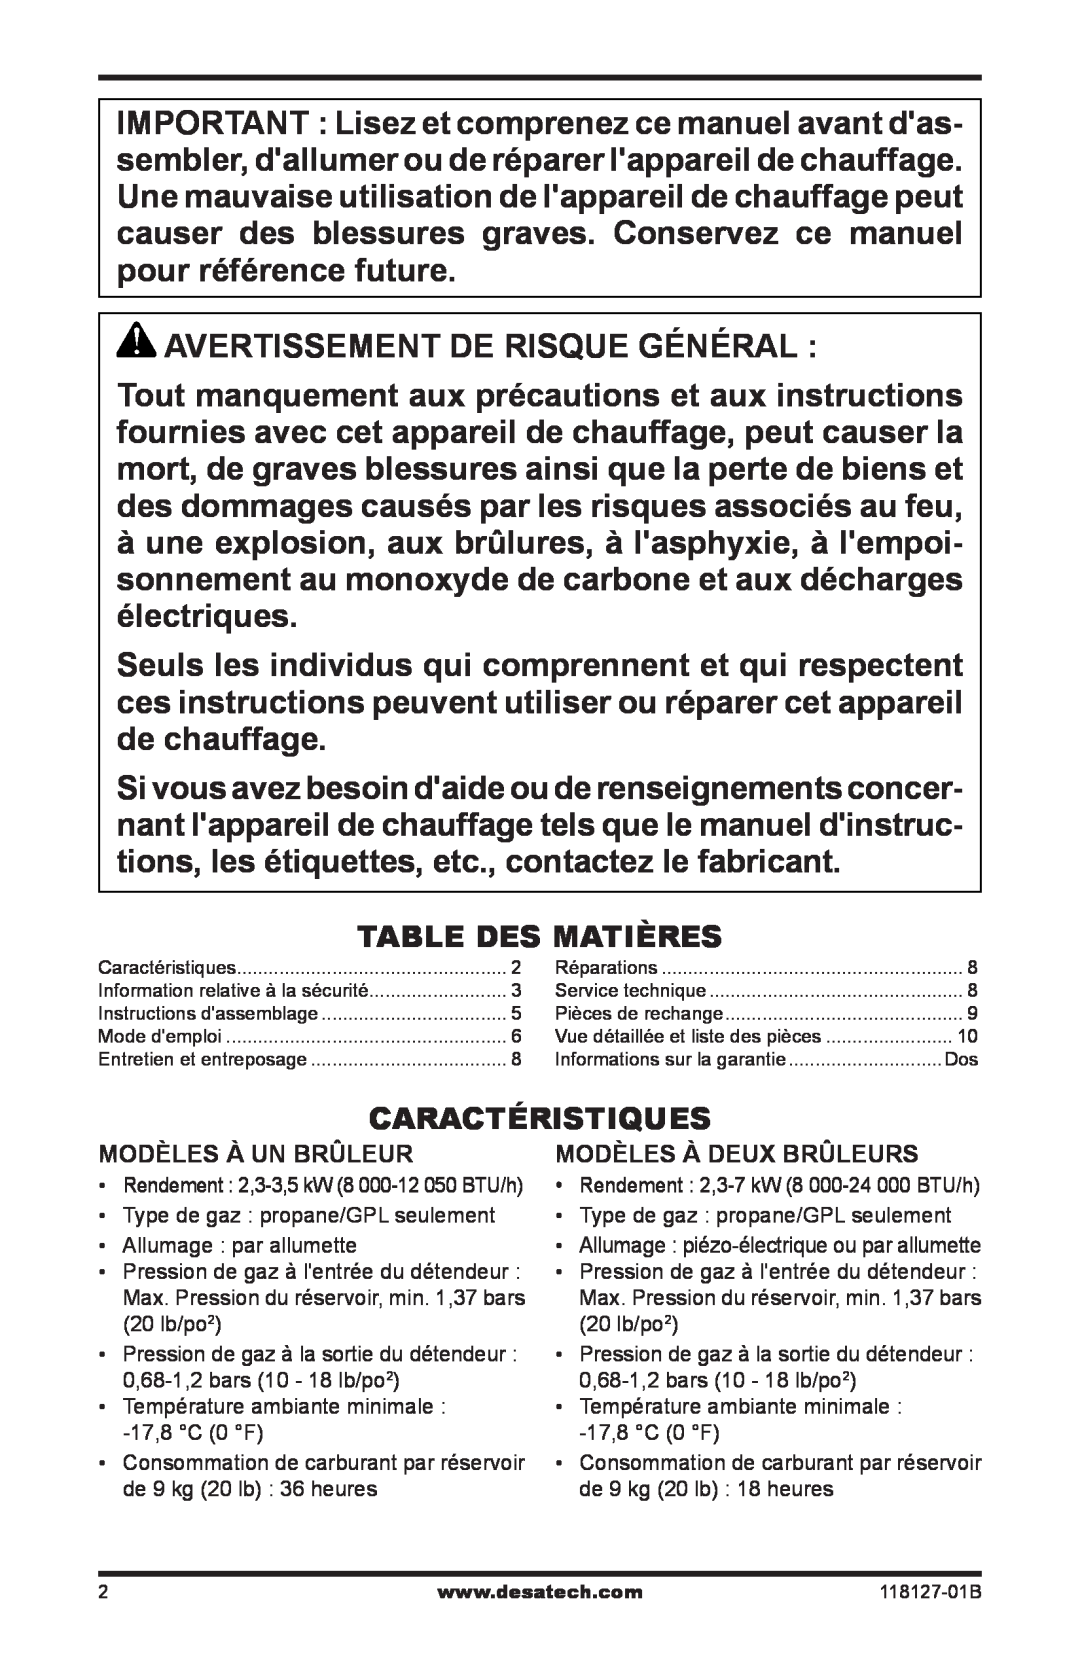 Desa 000-12, TC111 8, TC110 8, 050 BTU, 000-24 owner manual Avertissement De Risque Général 